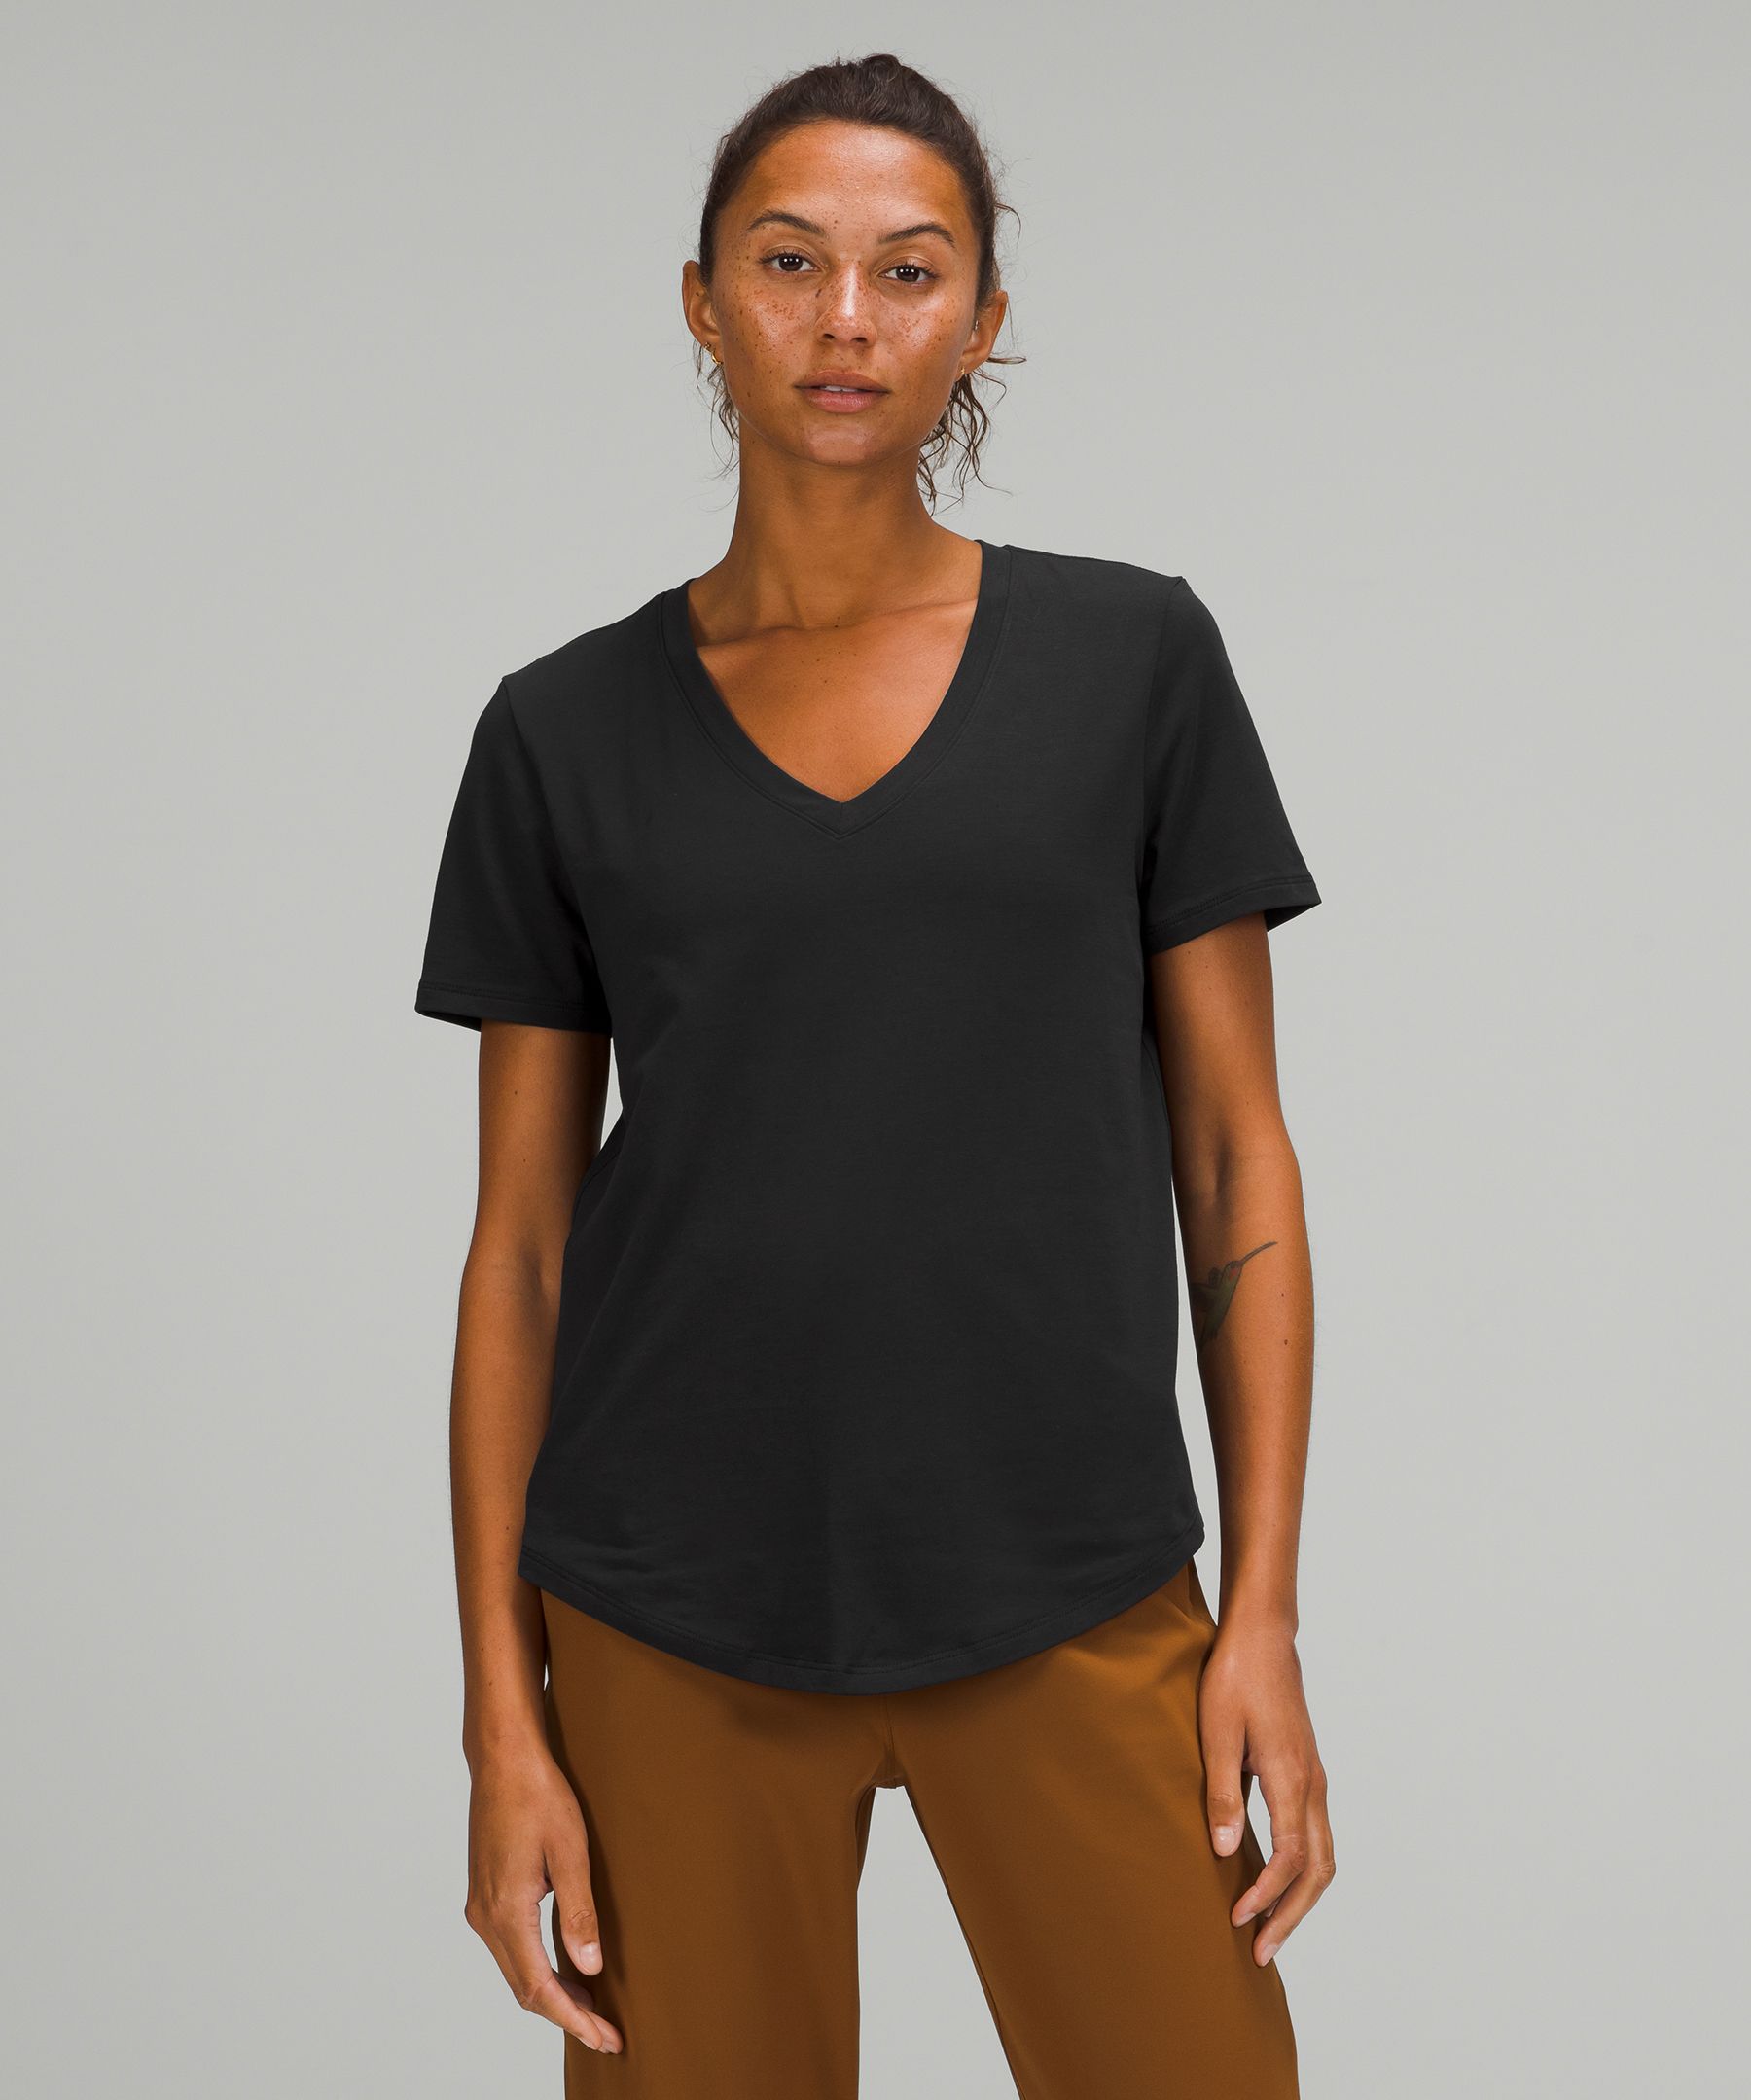 Consumeren gehandicapt Draak Women's Short Sleeve Shirts | lululemon